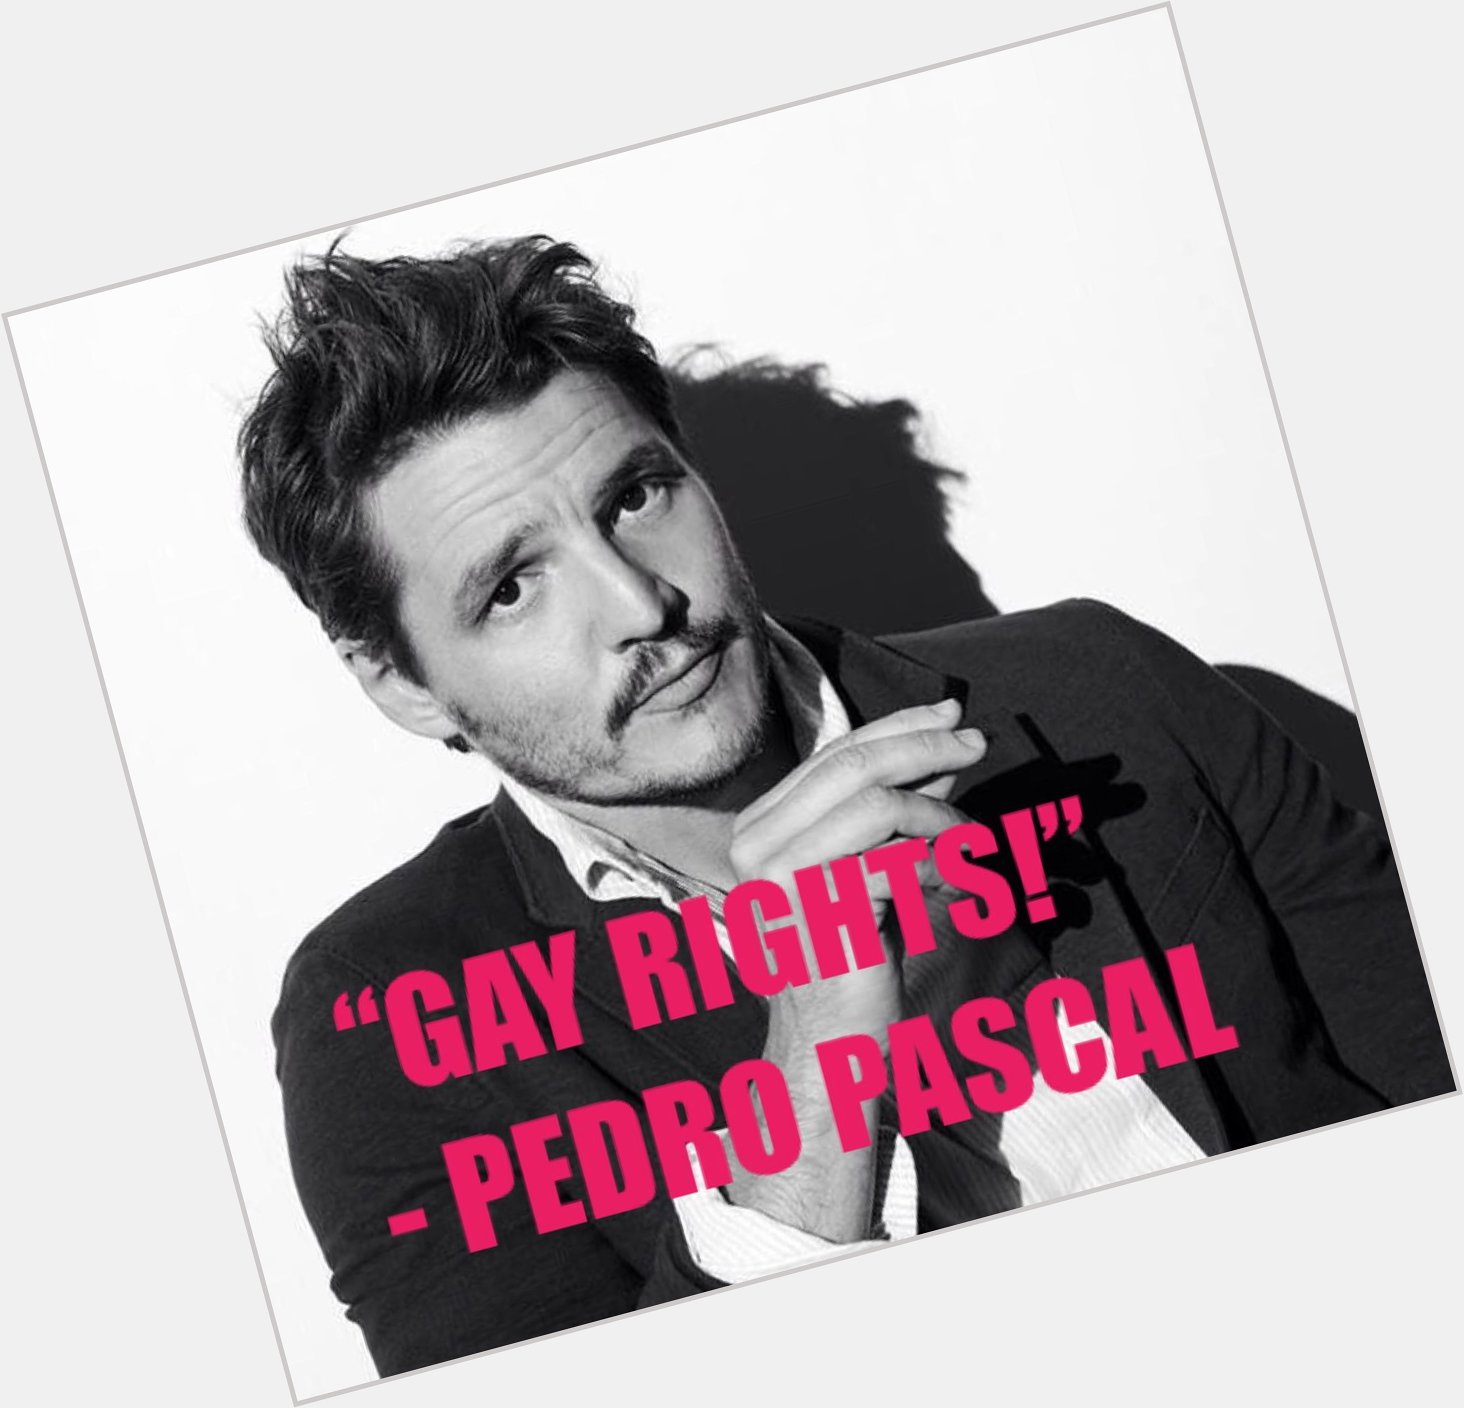 Happy birthday to gay icon pedro pascal! 